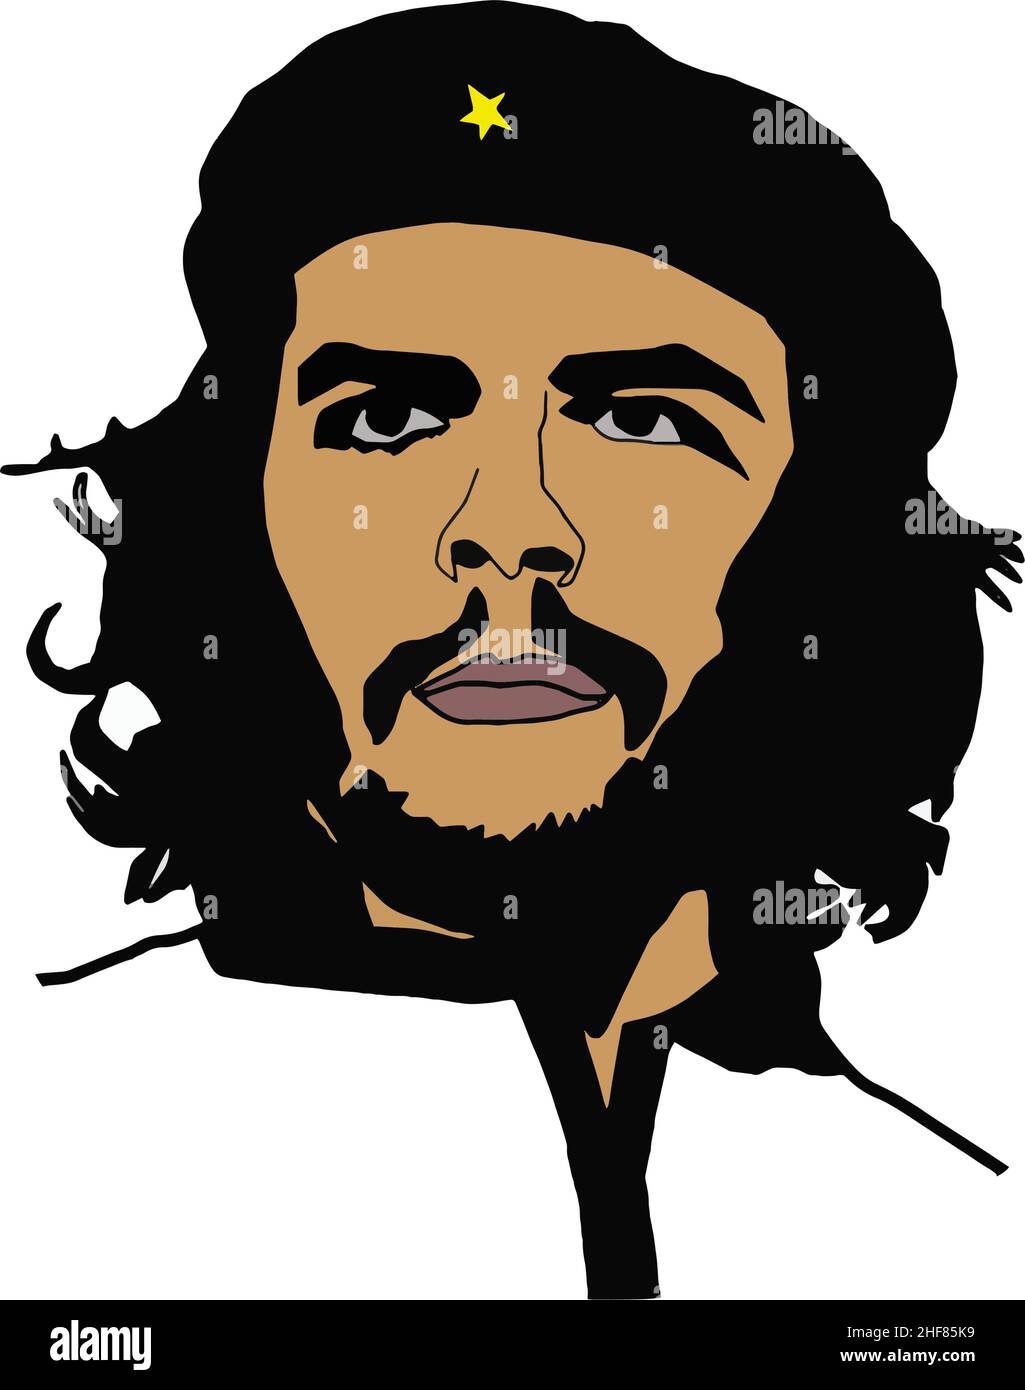 Logo vecteur Che Guevara Illustration de Vecteur